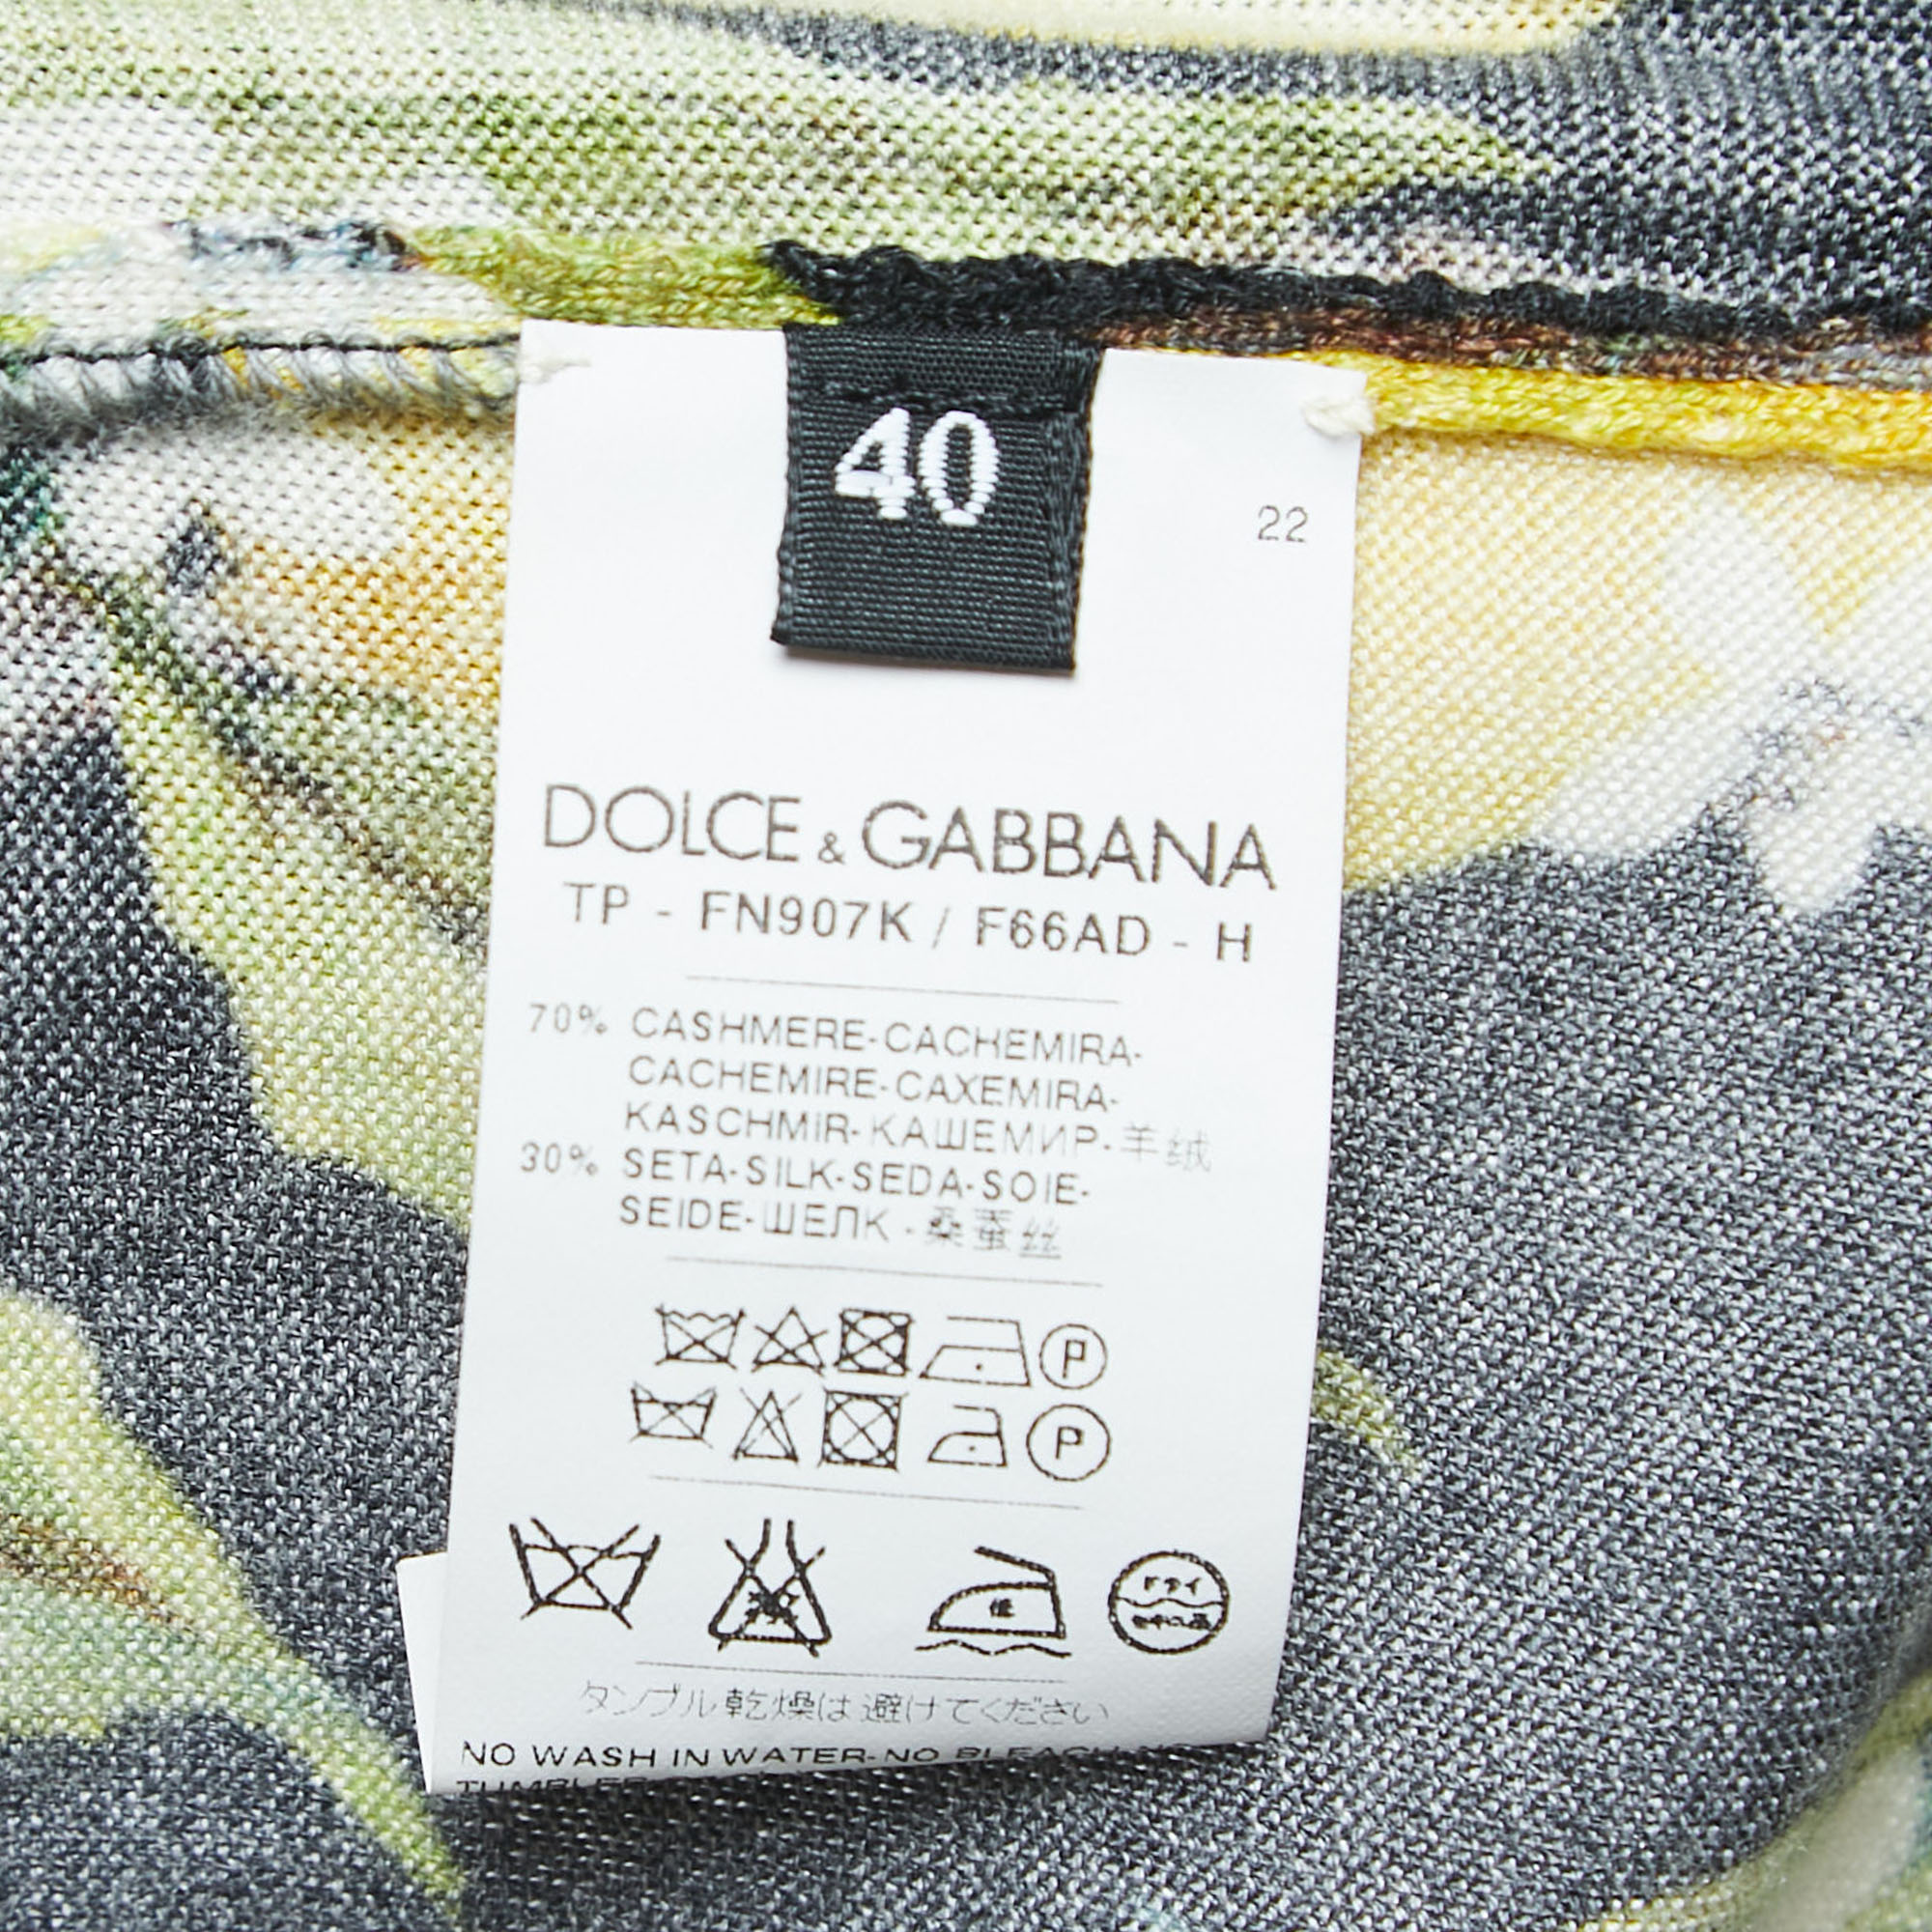 Dolce & Gabbana Black Lemon Printed Cashmere & Silk Knit Camisole S